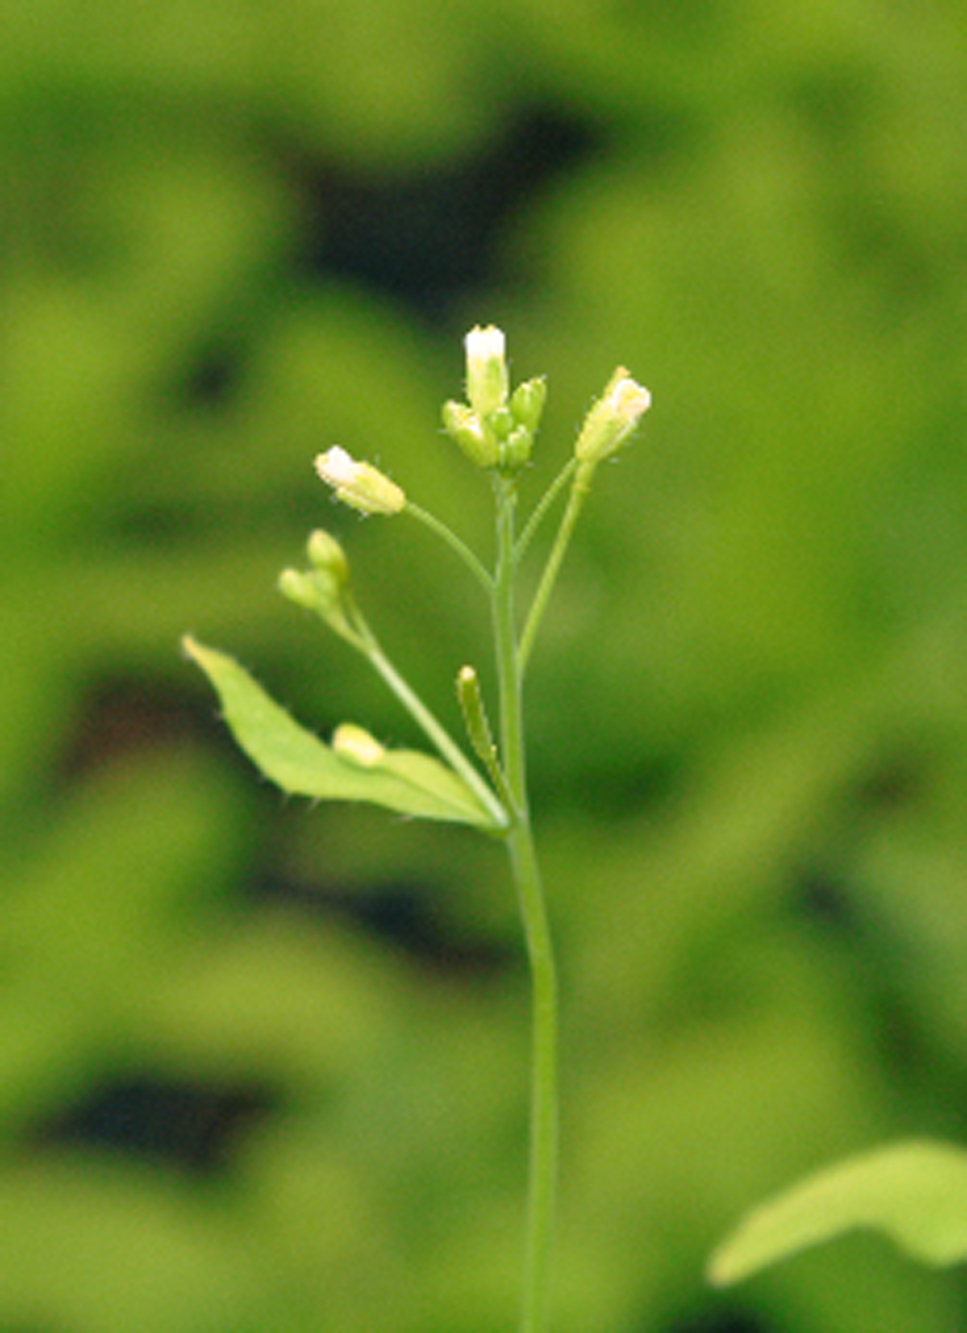 Flowers of the model plant Arabidopsis thaliana (thale cress).